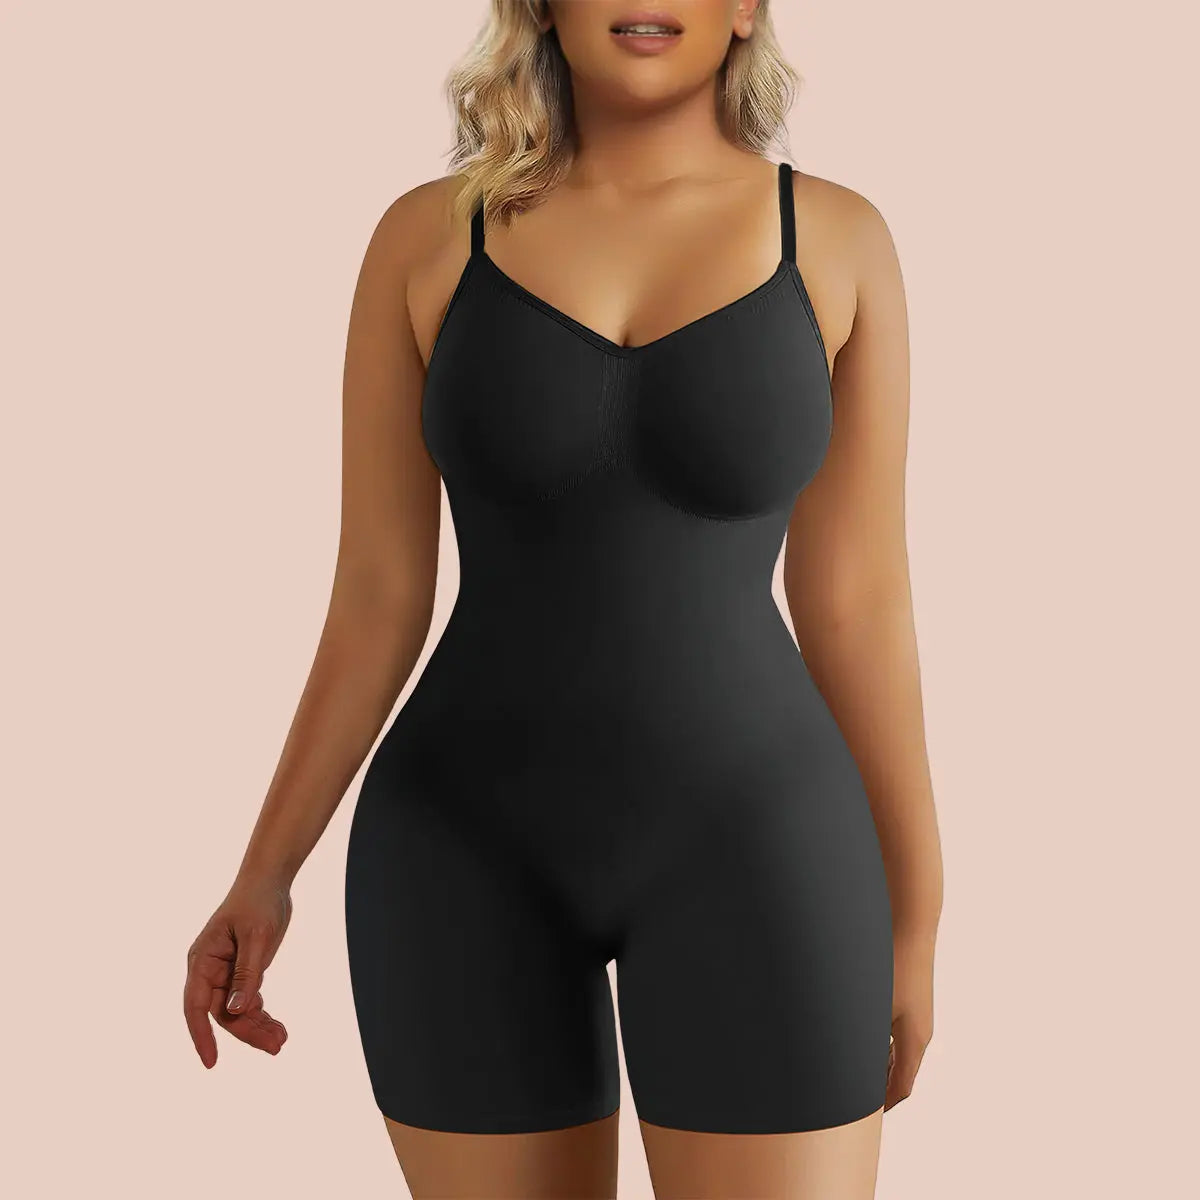 Bodysuit for Women Tummy Control Shapewear Mid Thigh Butt Lifter Seamless  Full Body Shaper Shorts (Color : Skin, Size : Medium)